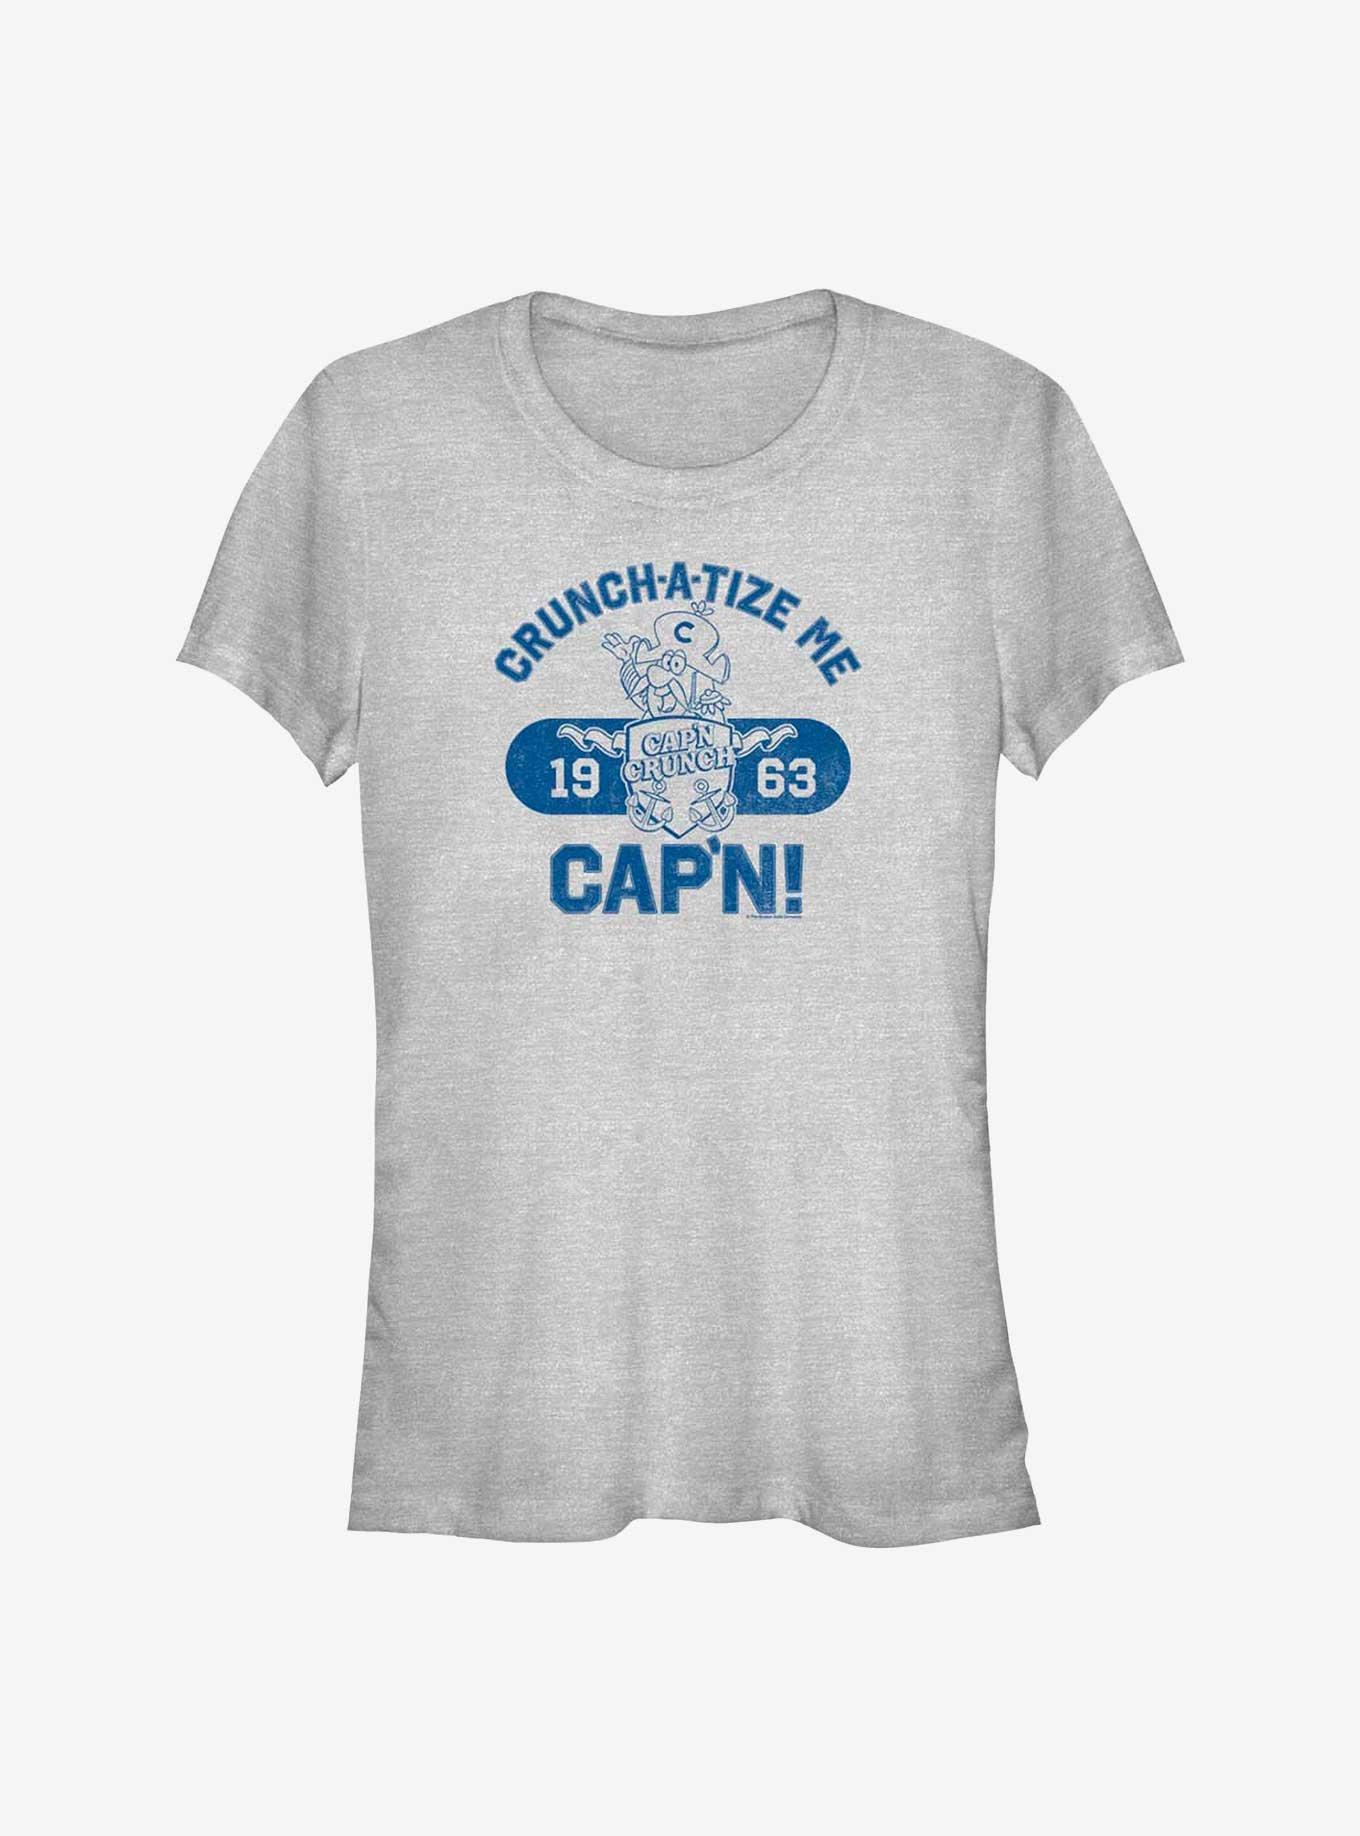 Capn Crunch Collegiate Girls T-Shirt, ATH HTR, hi-res